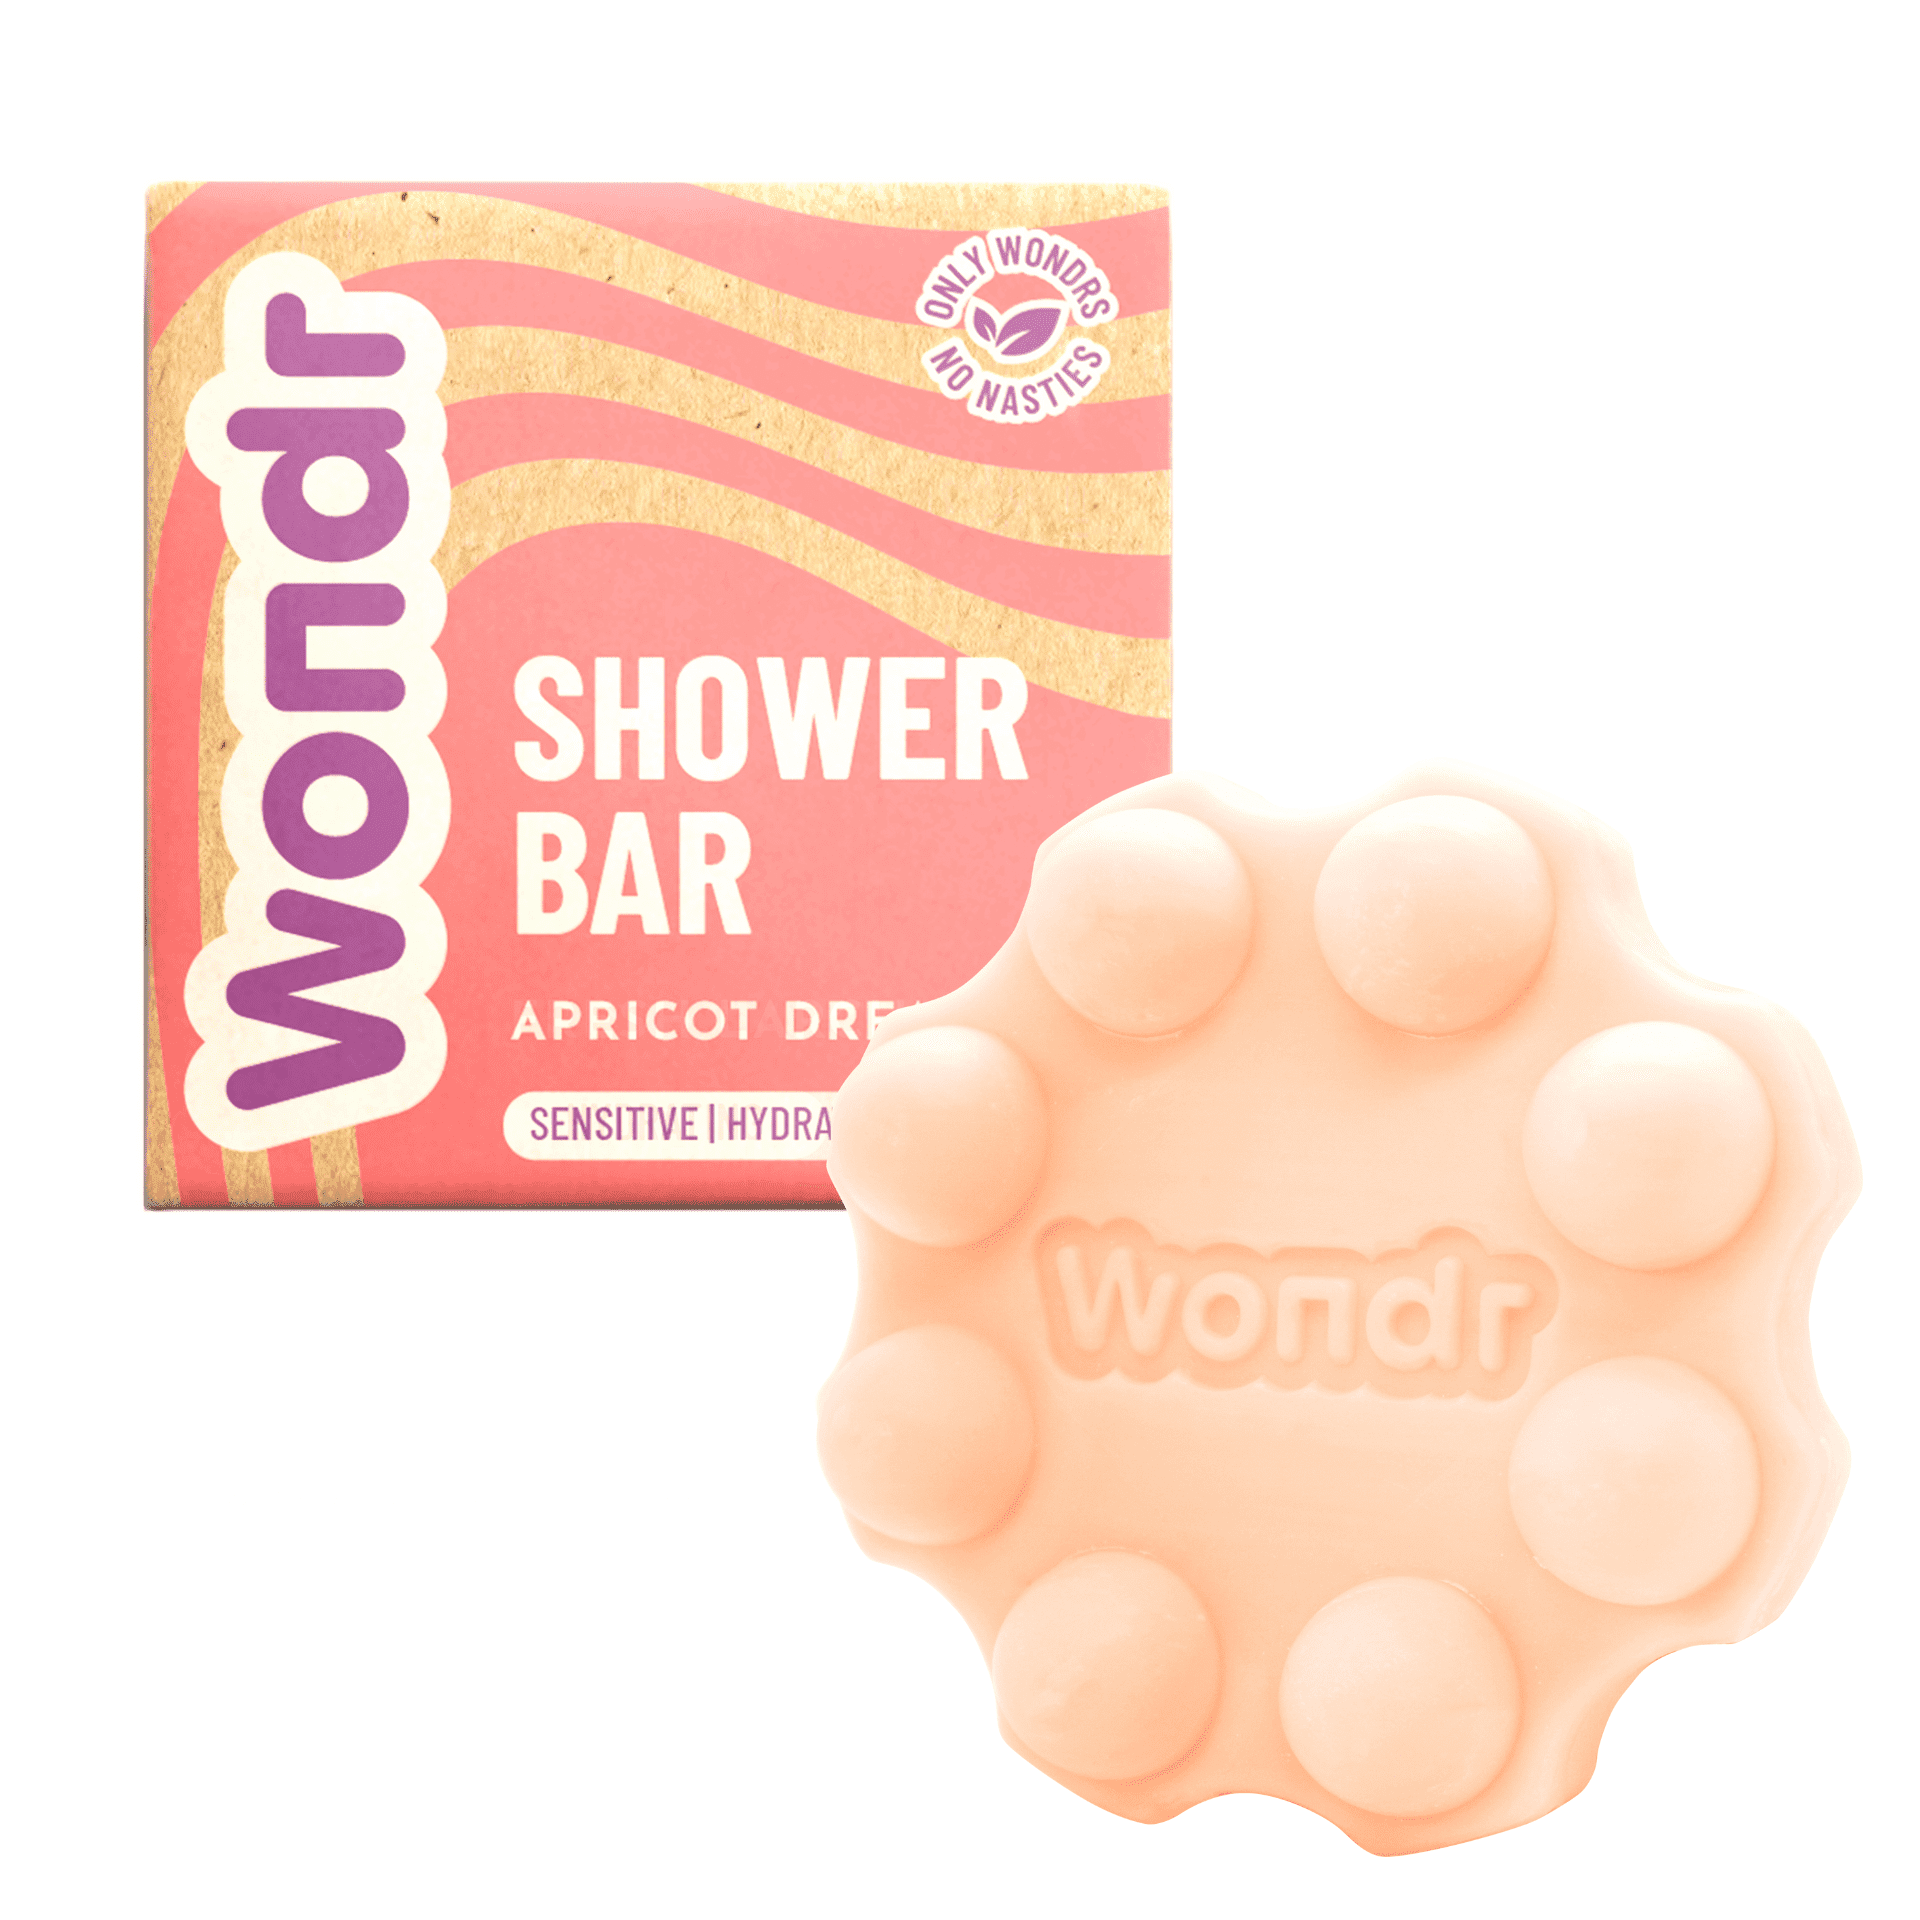 WONDR Shower Bar Apricot Dreams